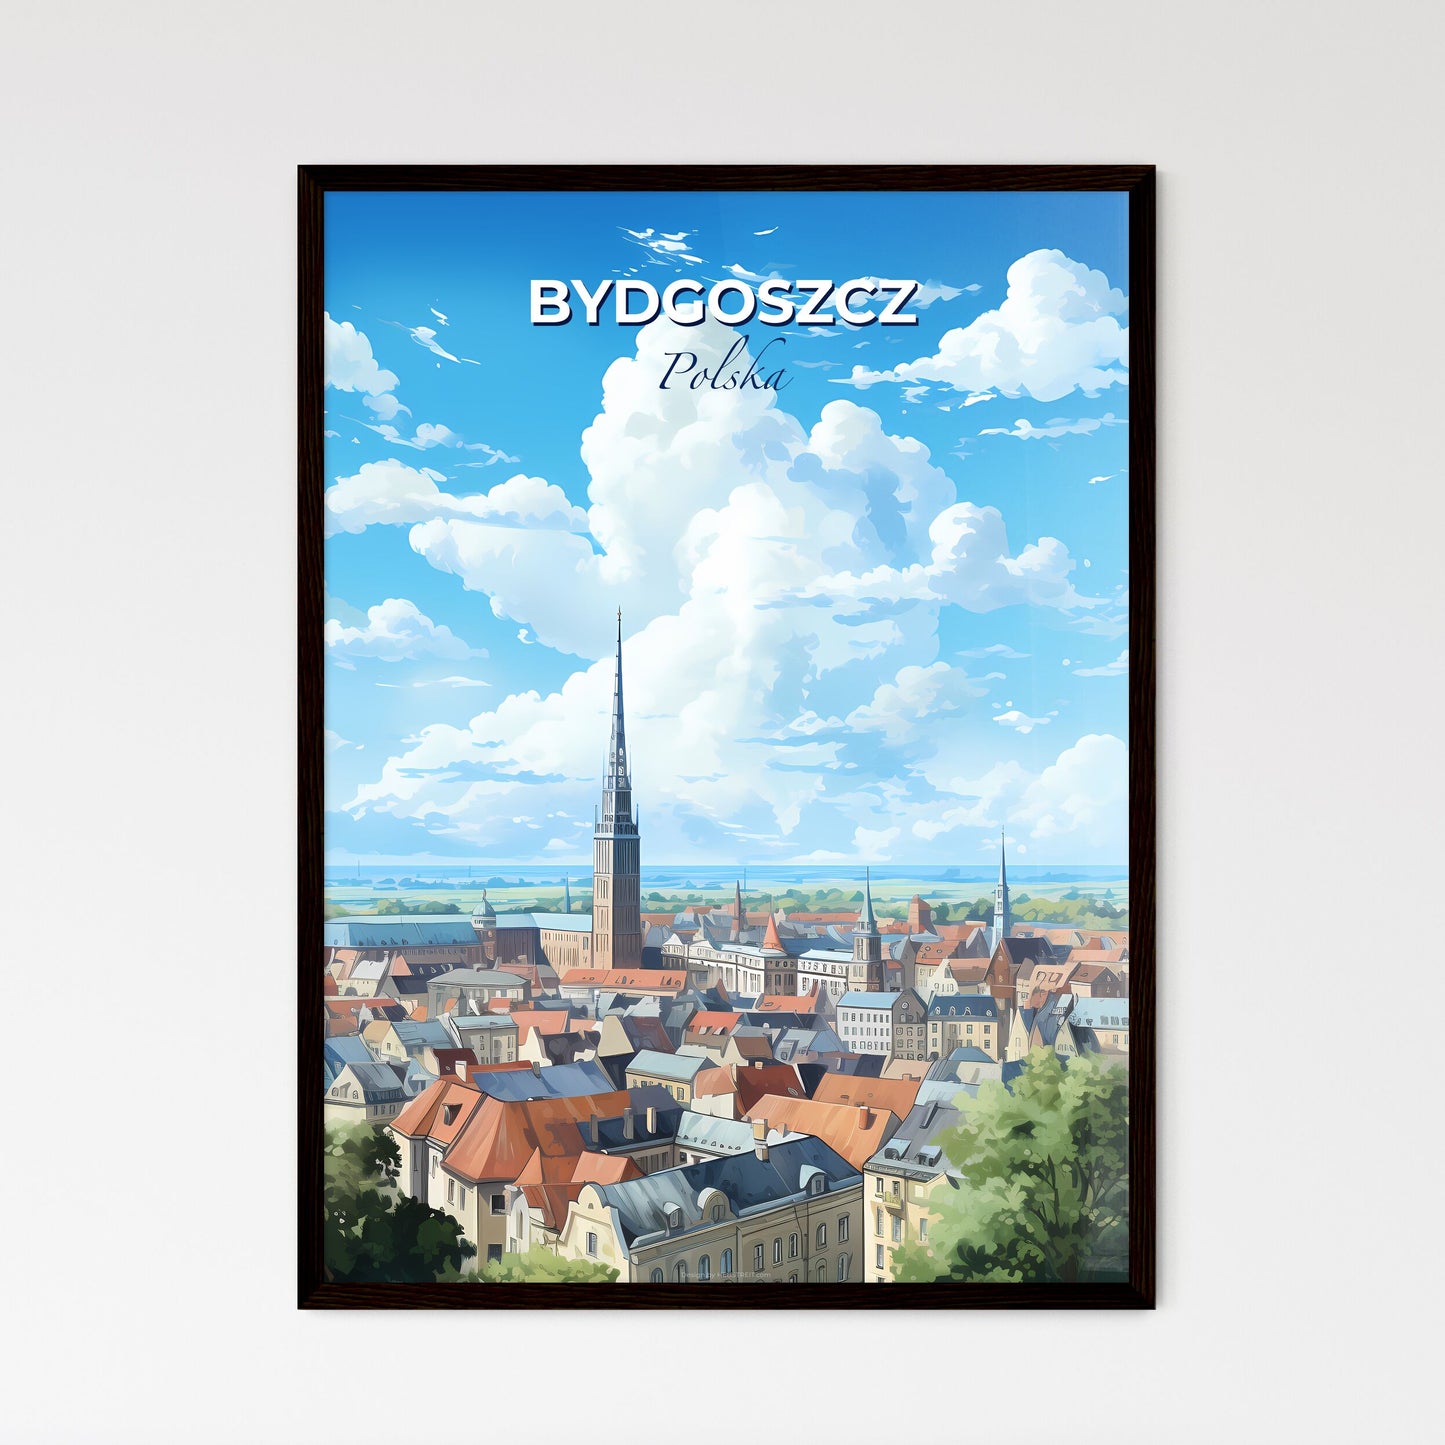 Bydgoszcz Polska Skyline - A City With A Tall Spire - Customizable Travel Gift Default Title